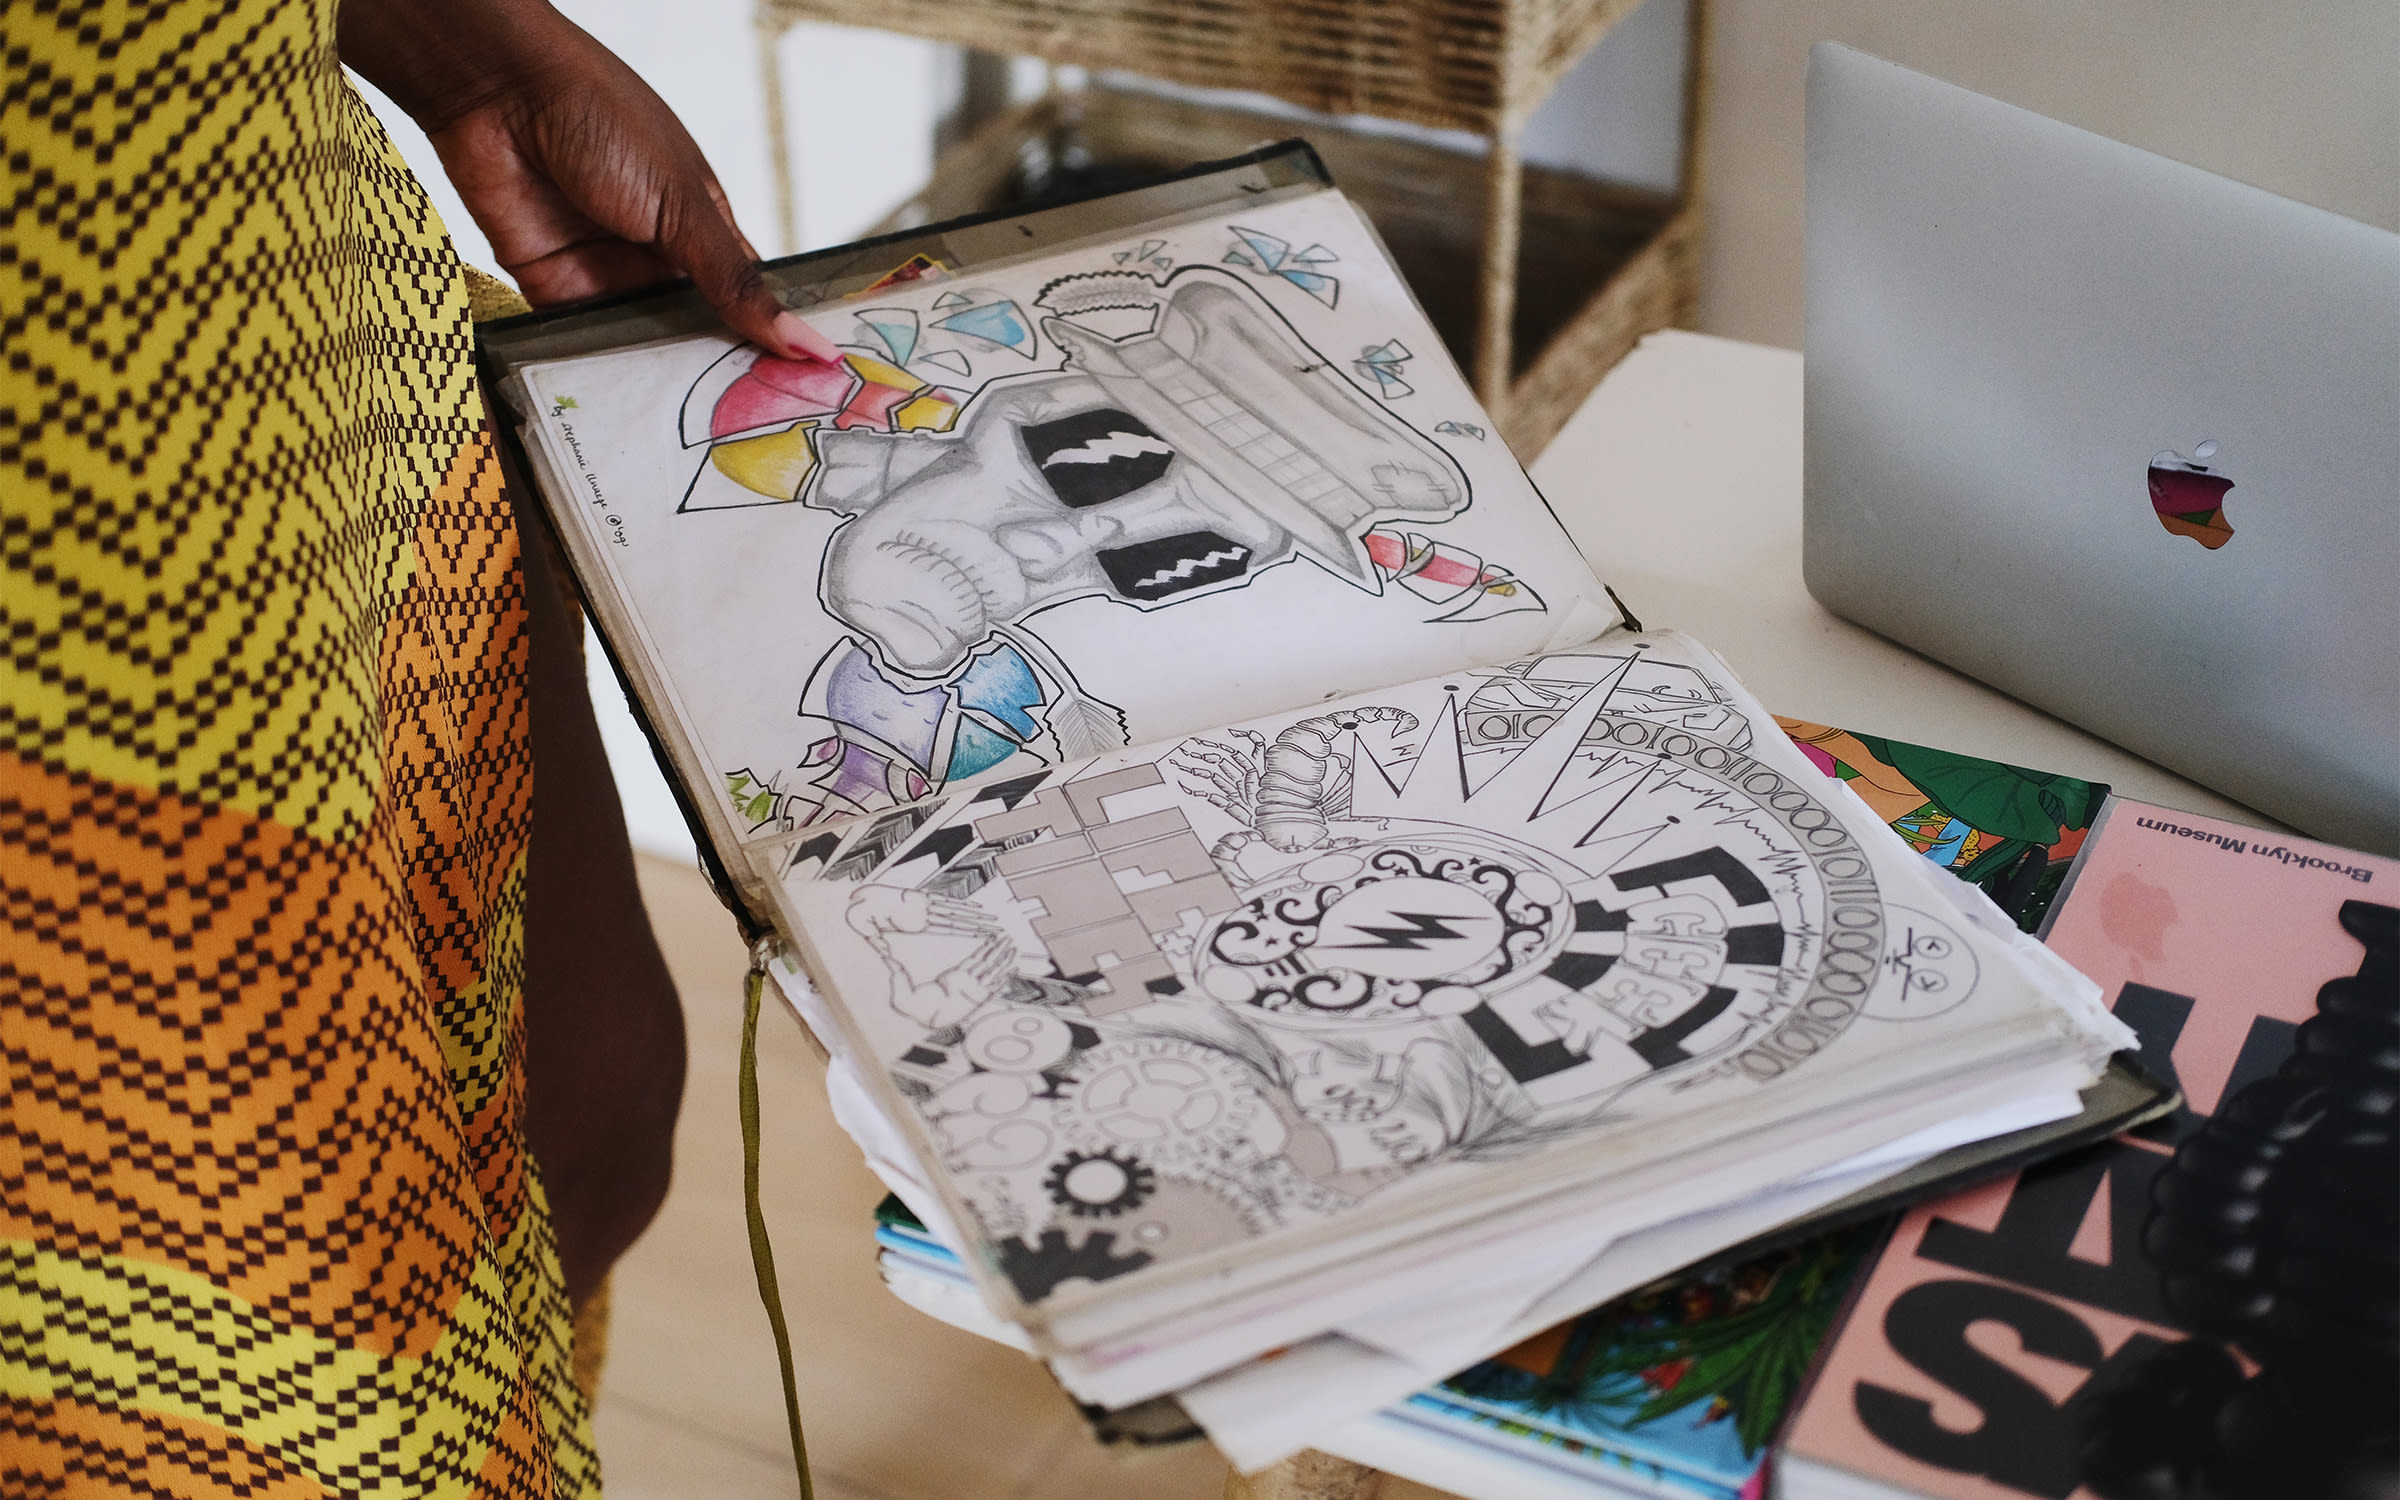 Stephanie Unaeze's sketchbook. Photo by Ugochukwu Emebiriodo for Art Basel.